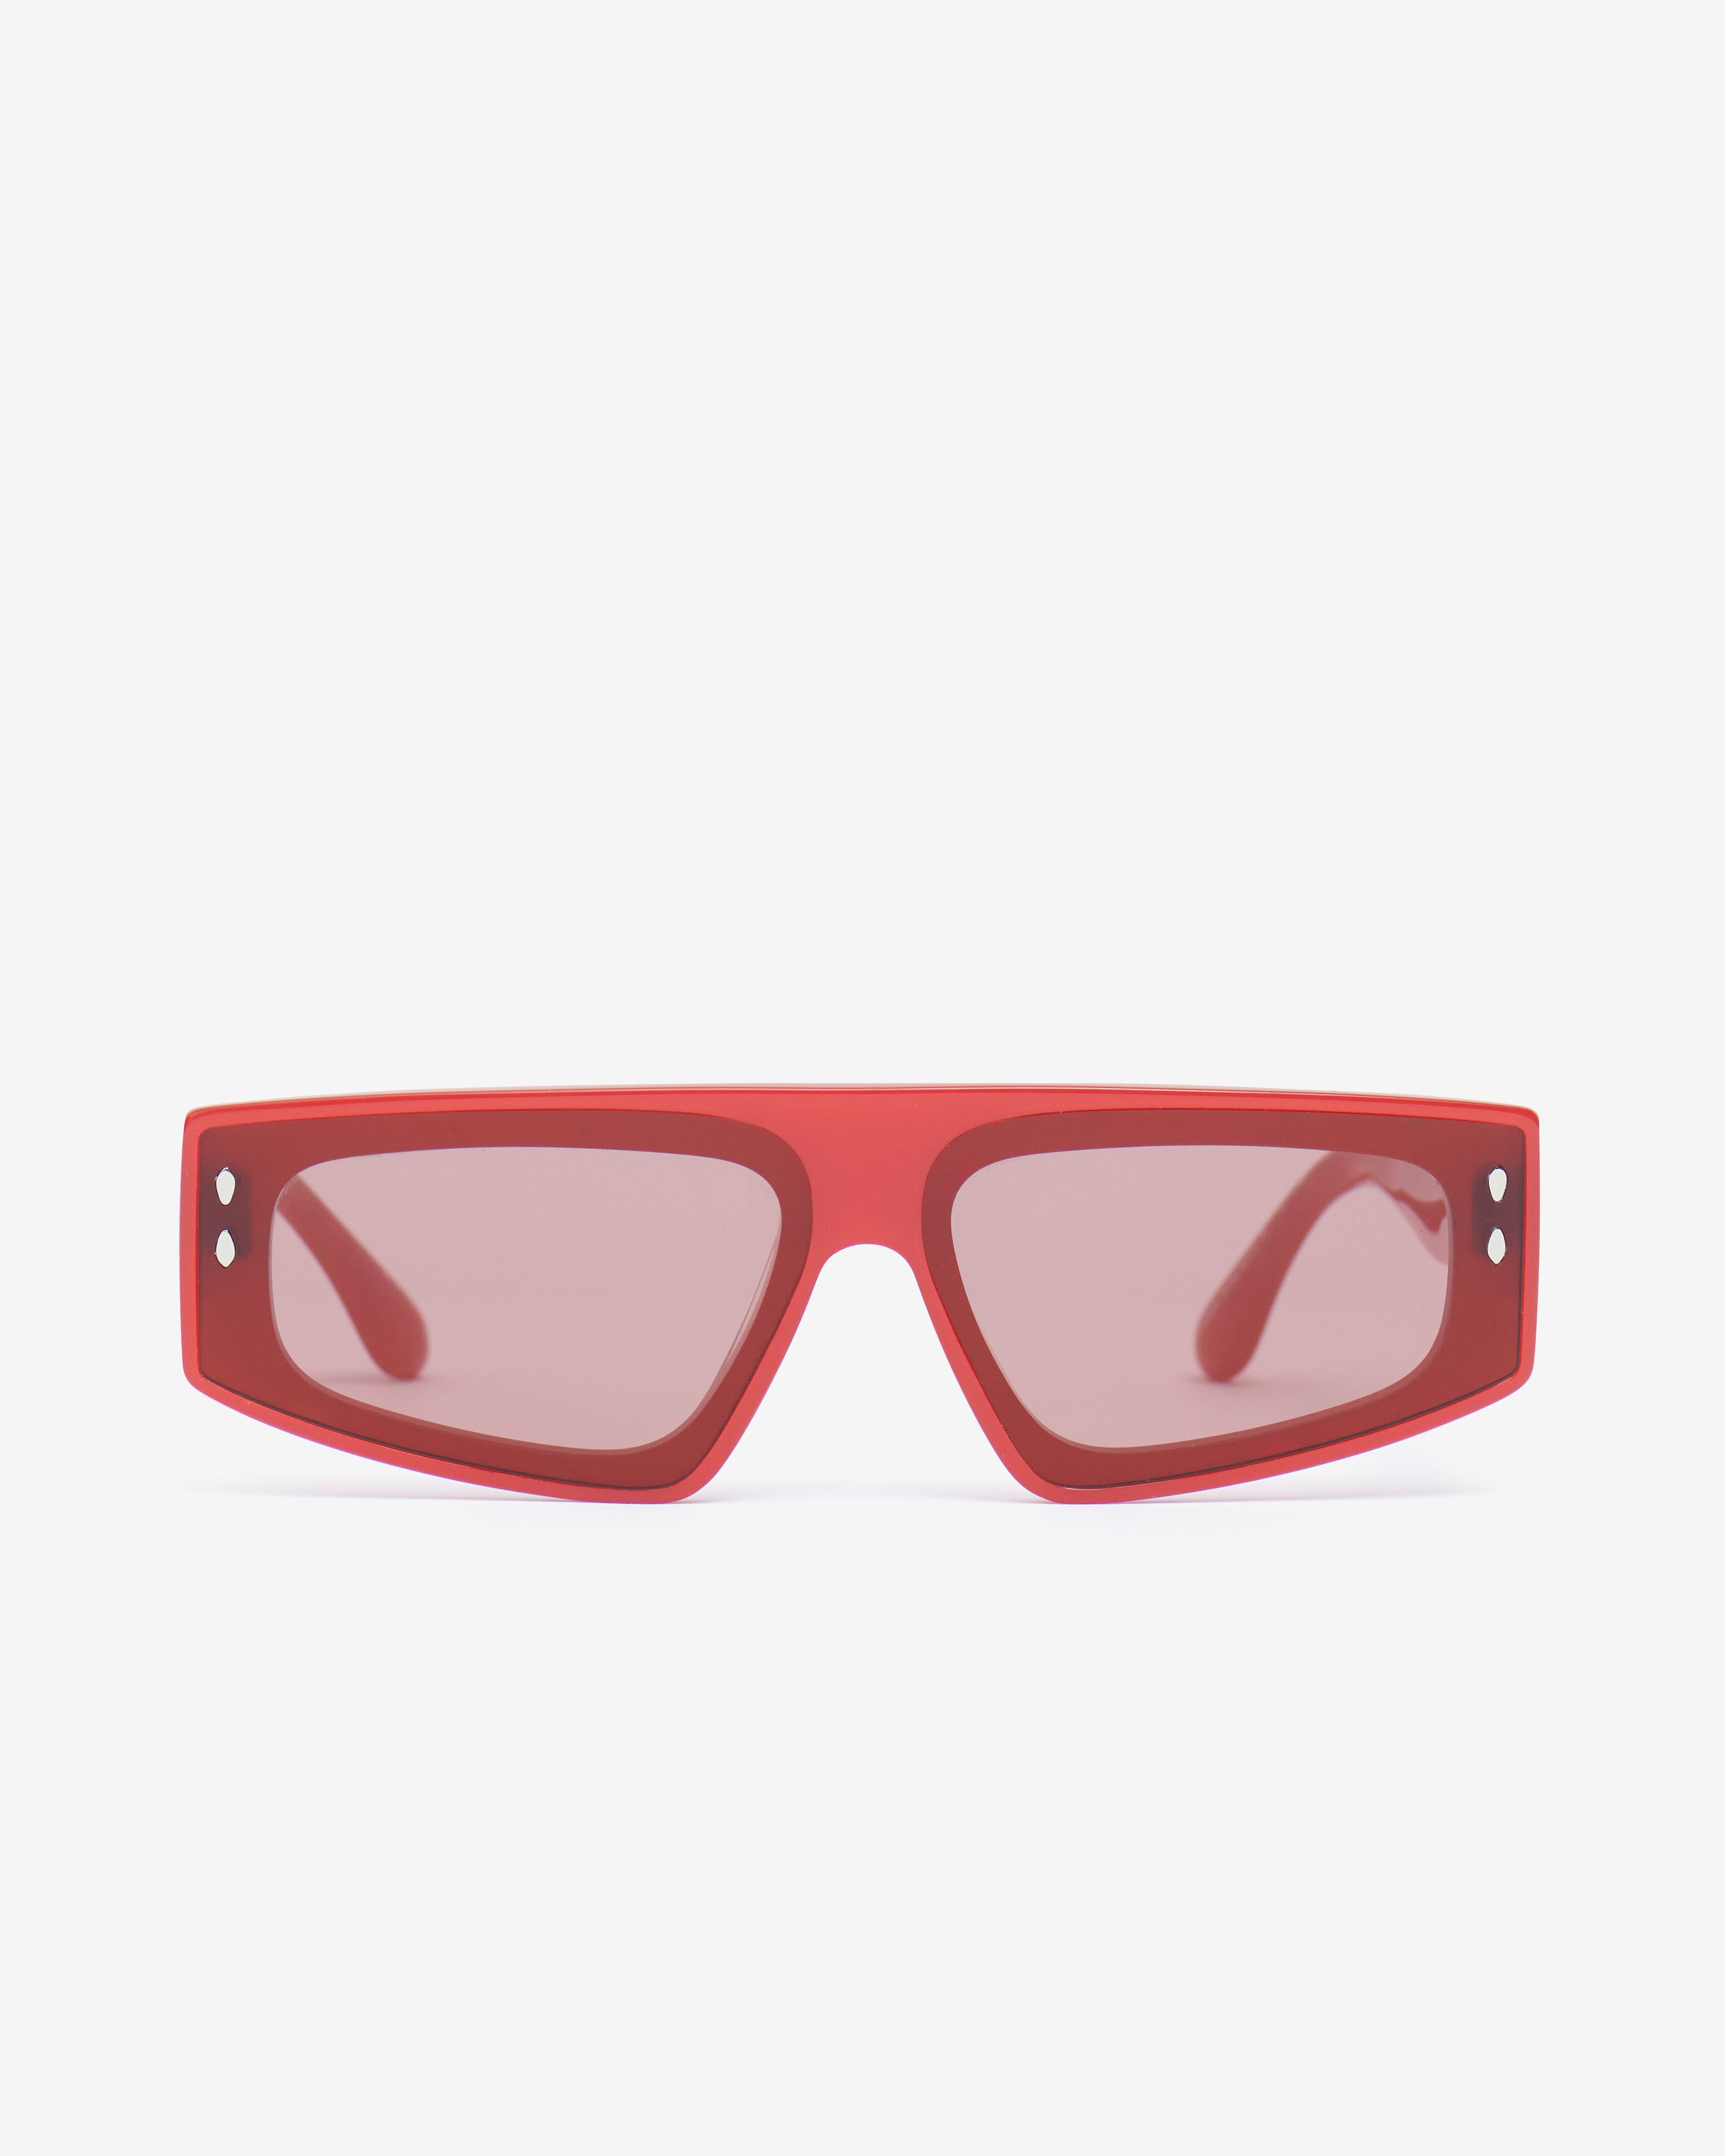 Zoomy occhiali da sole Woman Pearled red-burgundy 2